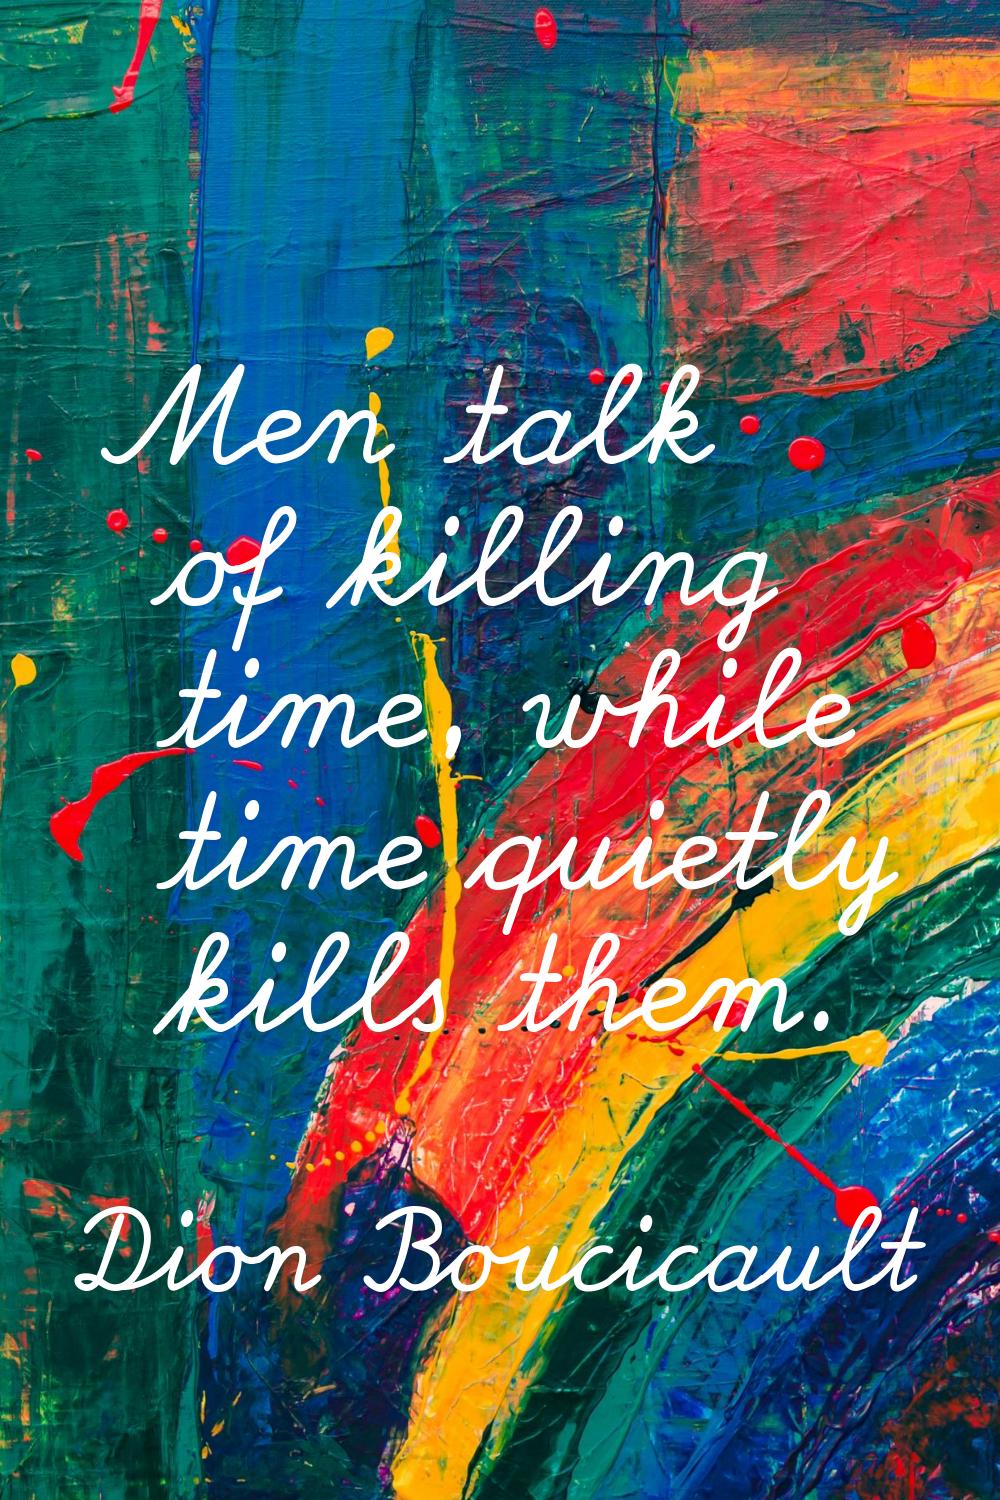 Men talk of killing time, while time quietly kills them.